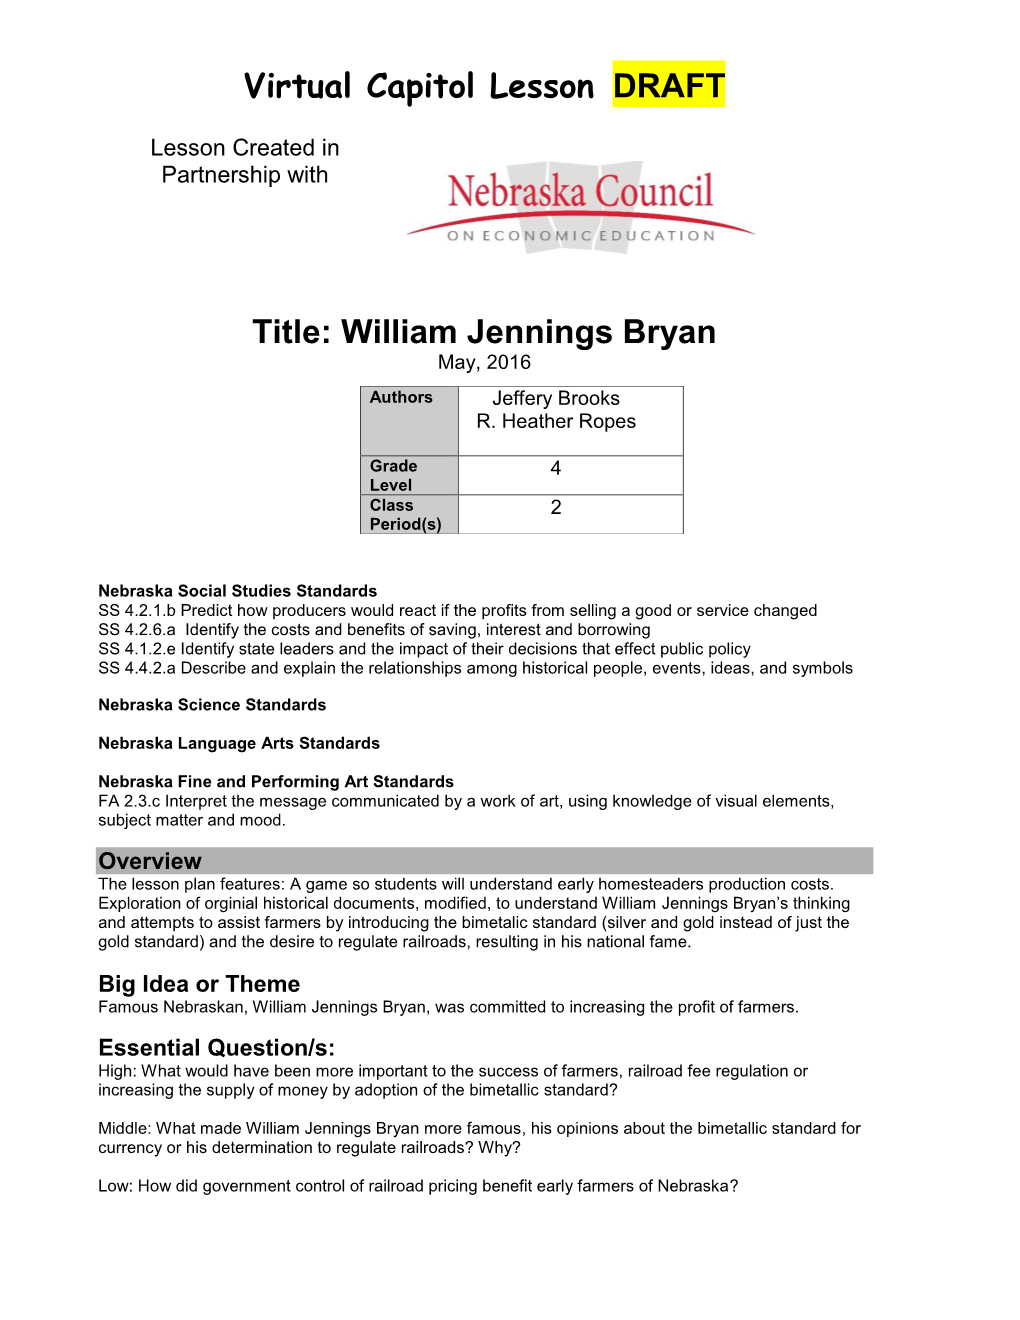 Virtual Capitol Lesson DRAFT Title: William Jennings Bryan